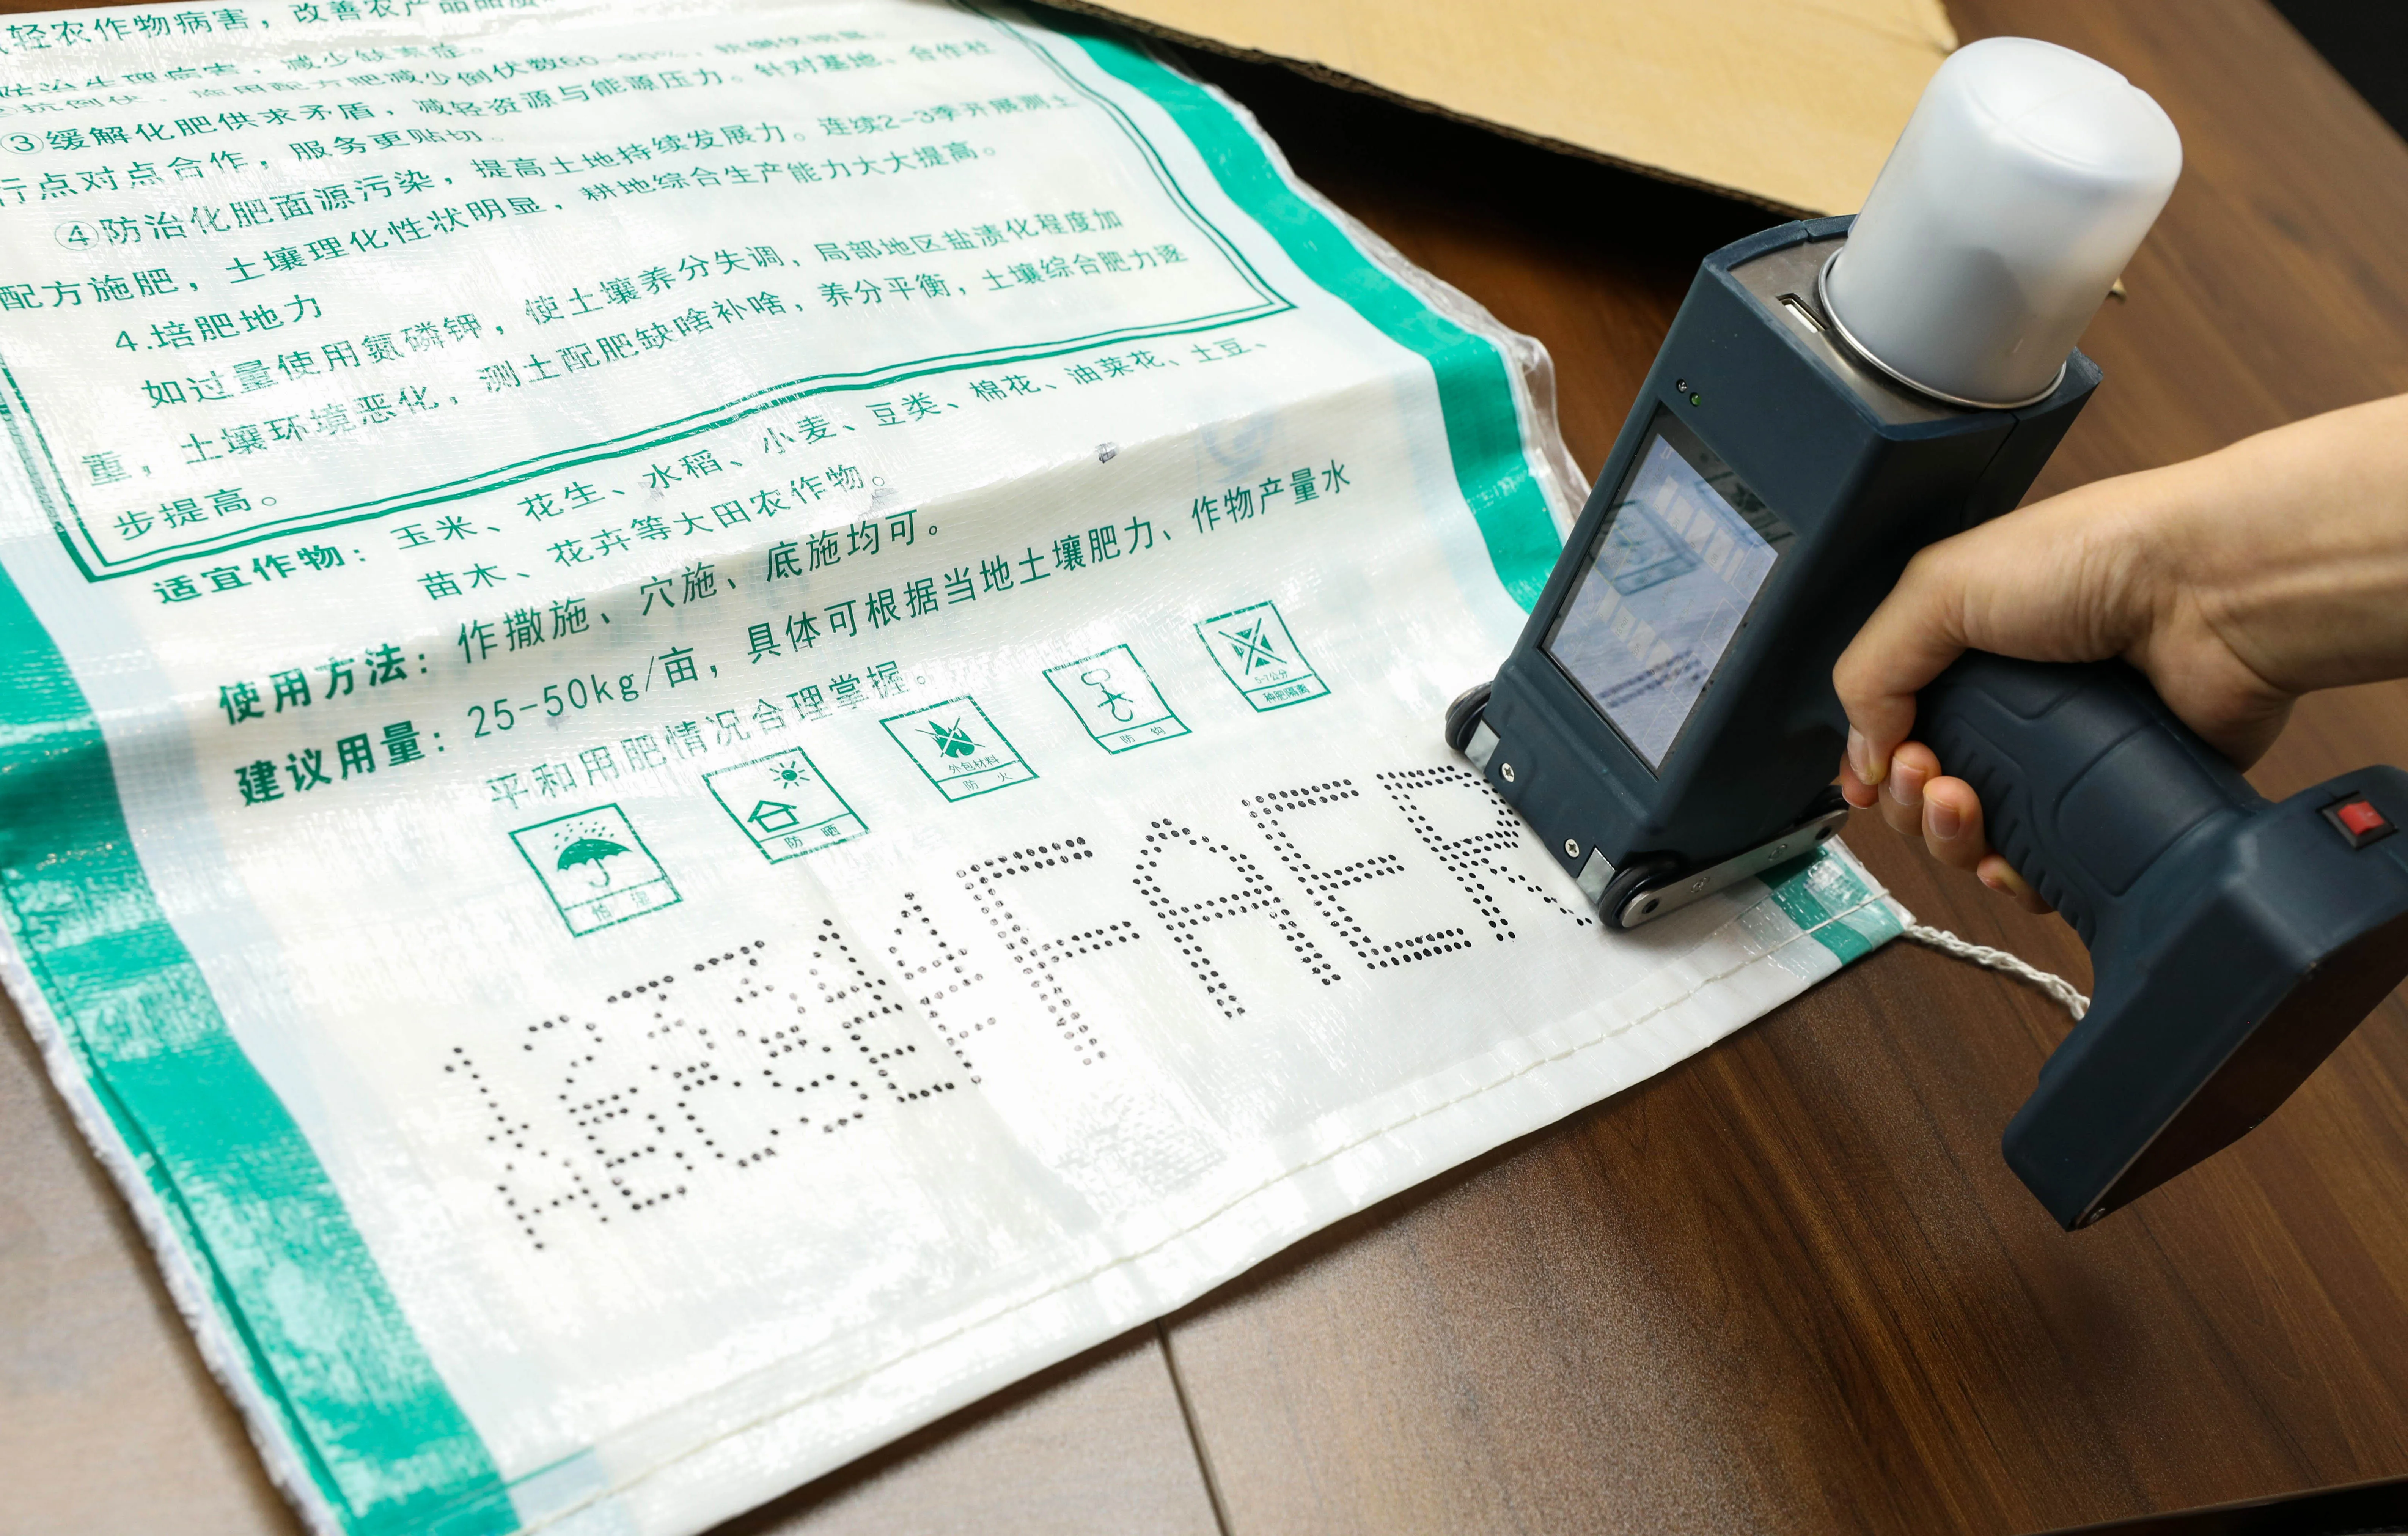 Meenjet Large Font Hand Jet Inkjet Coder 60mm Height Portable Handheld Inkjet Coding Date Printer View Ebs 260 Meenjet Support Oem Odm Product Details From Wuhan Xiantong Technology Co Ltd On Alibaba Com